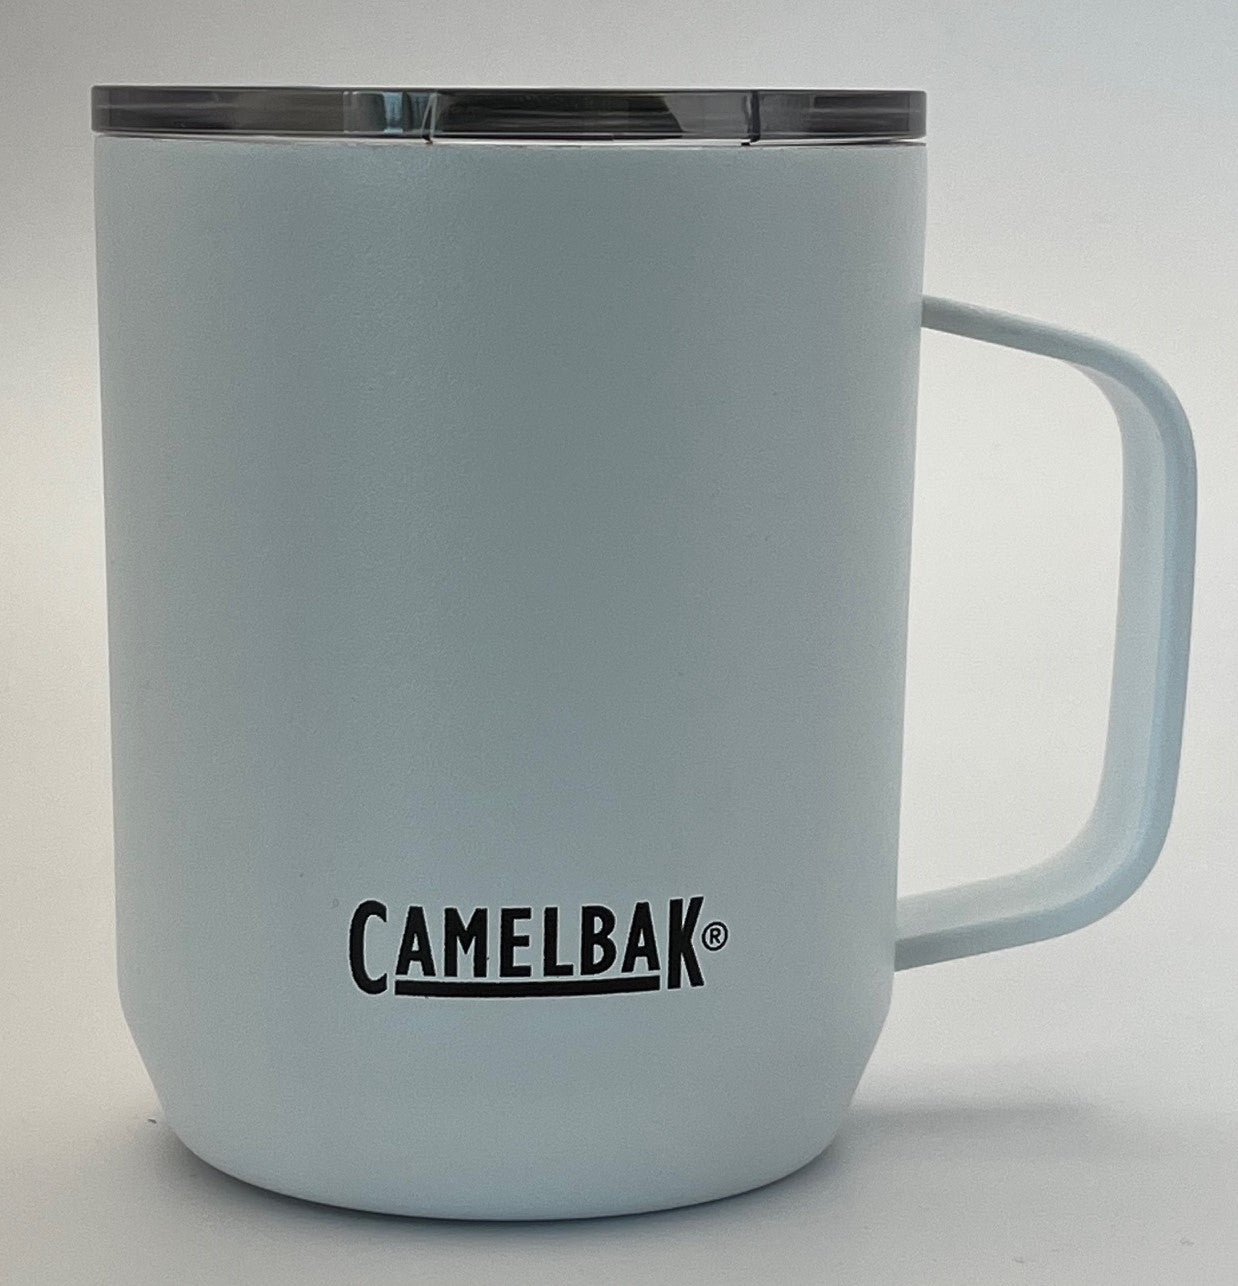  CamelBak Vacuum Camp Mug - 12 oz. 159739